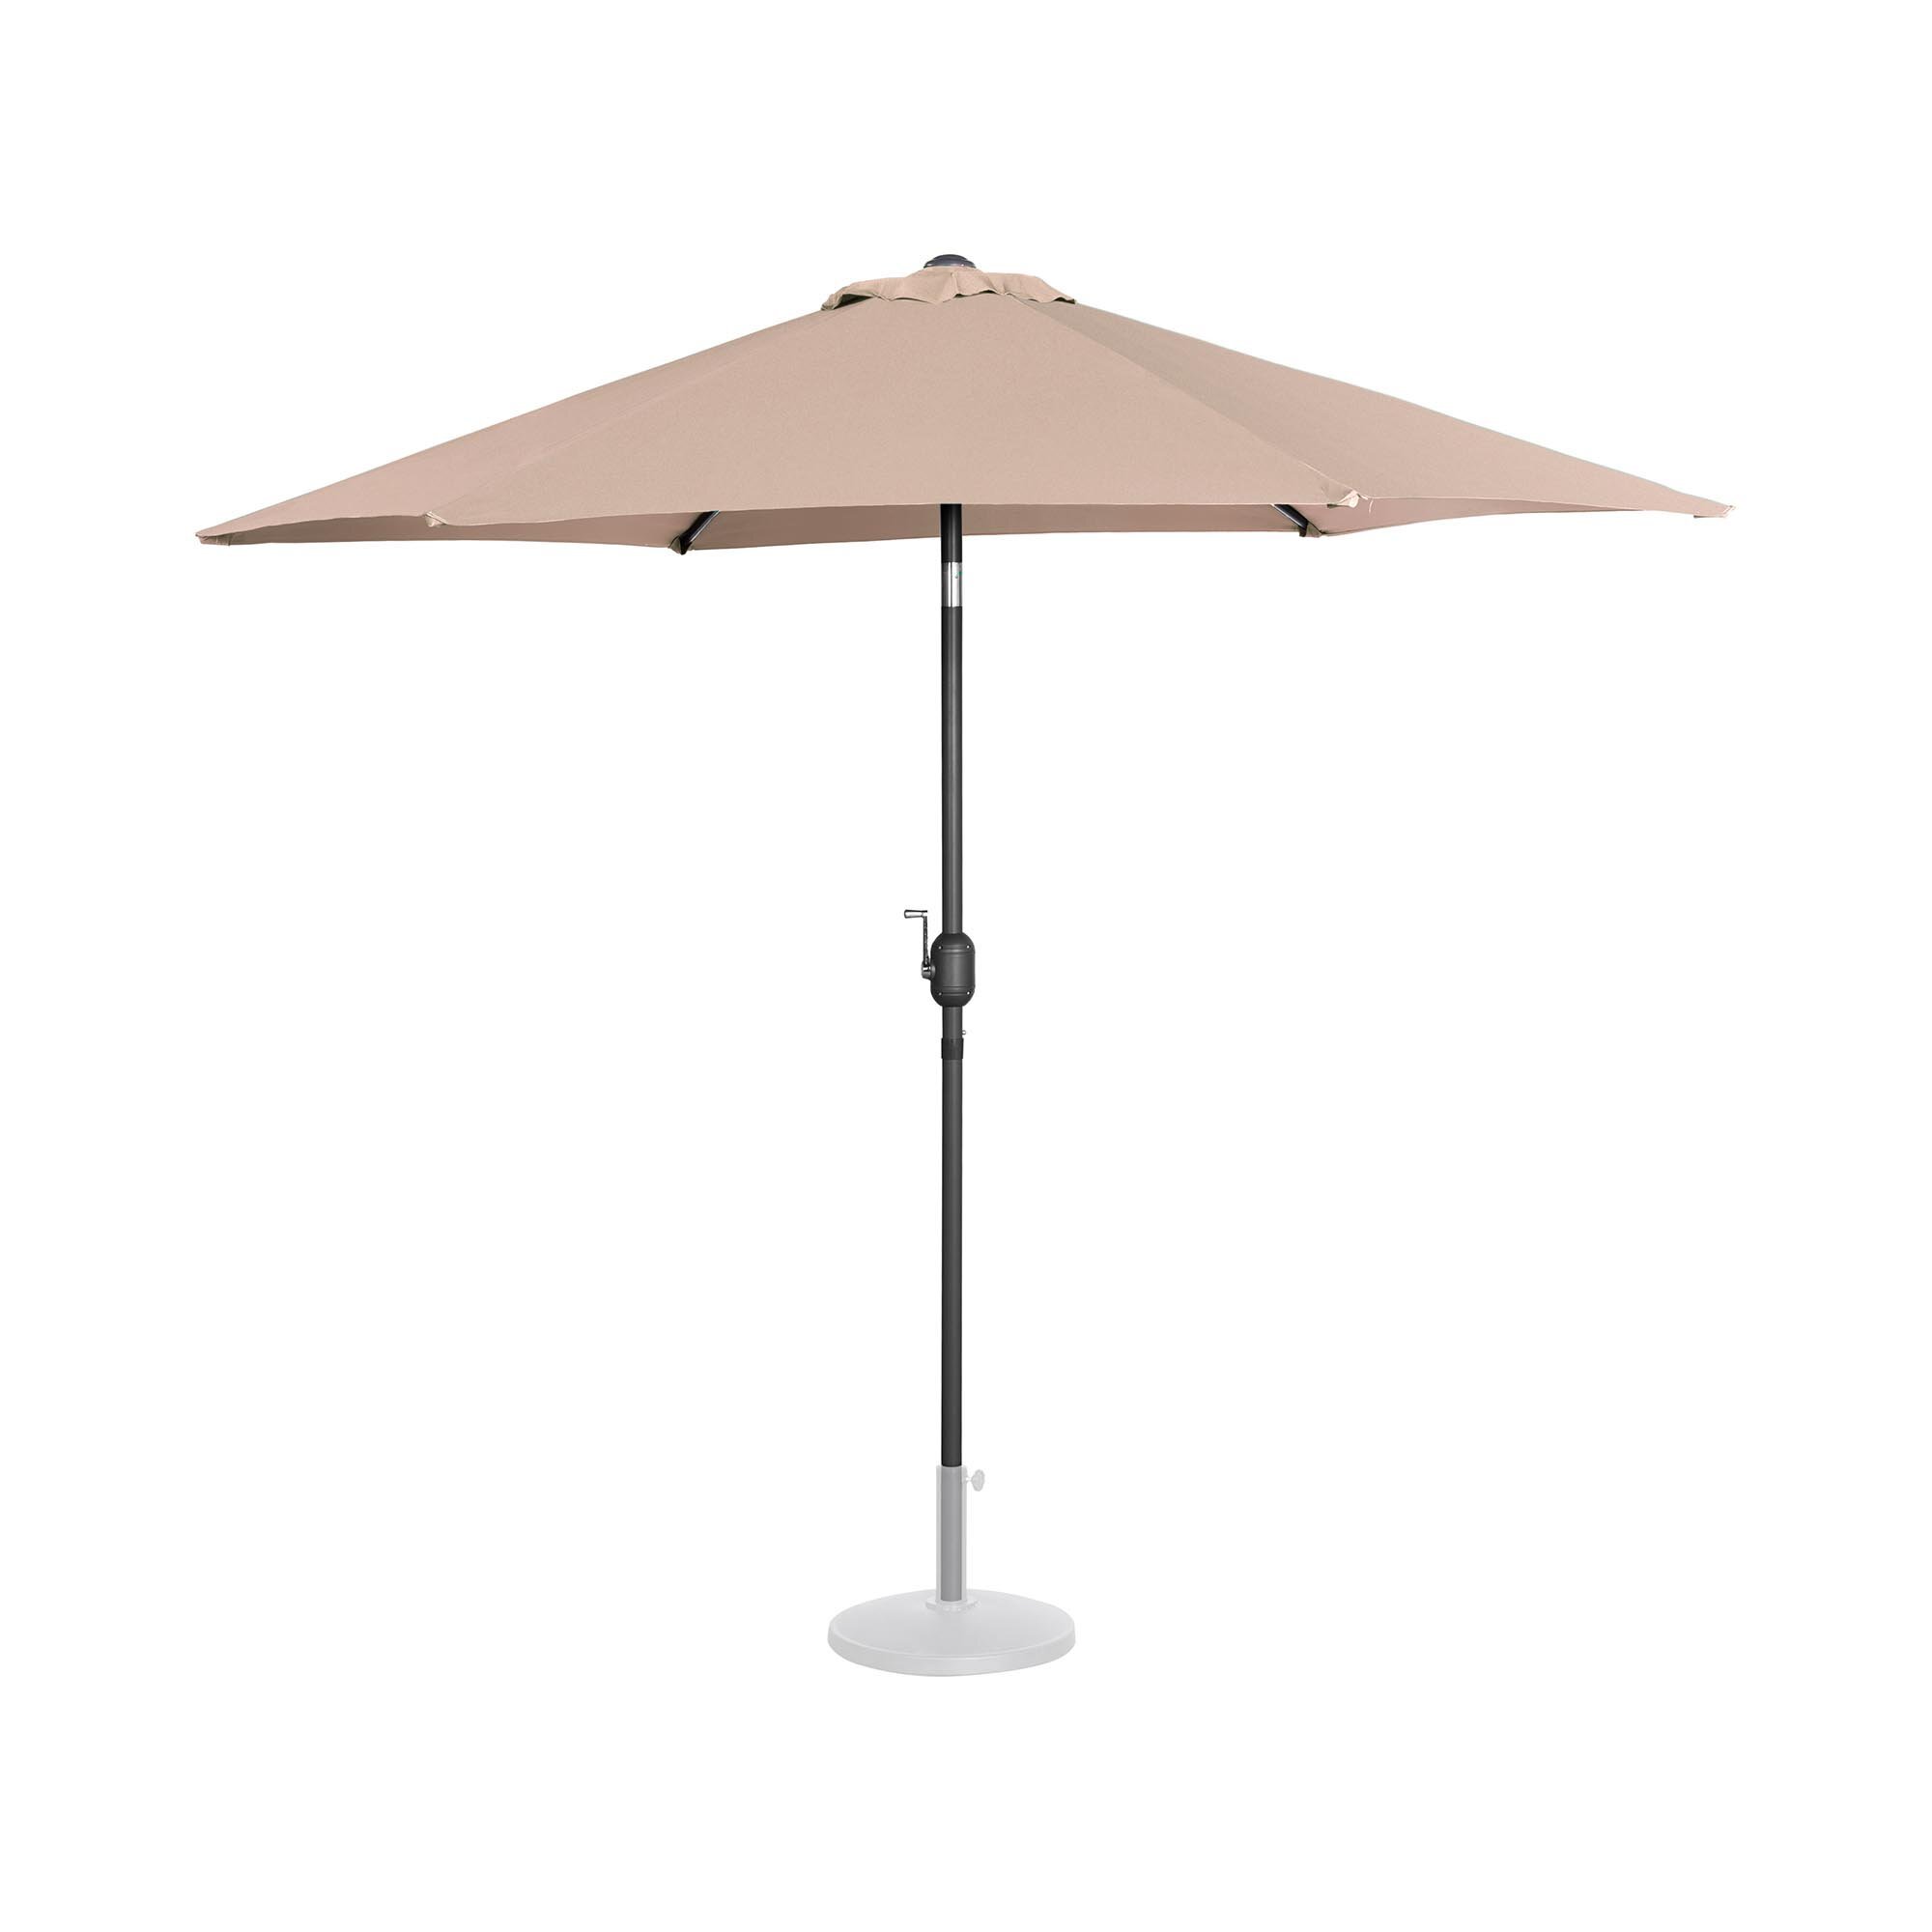 Uniprodo Parasol groot - crèmekleurig - zeshoekig - Ø 270 cm - kantelbaar